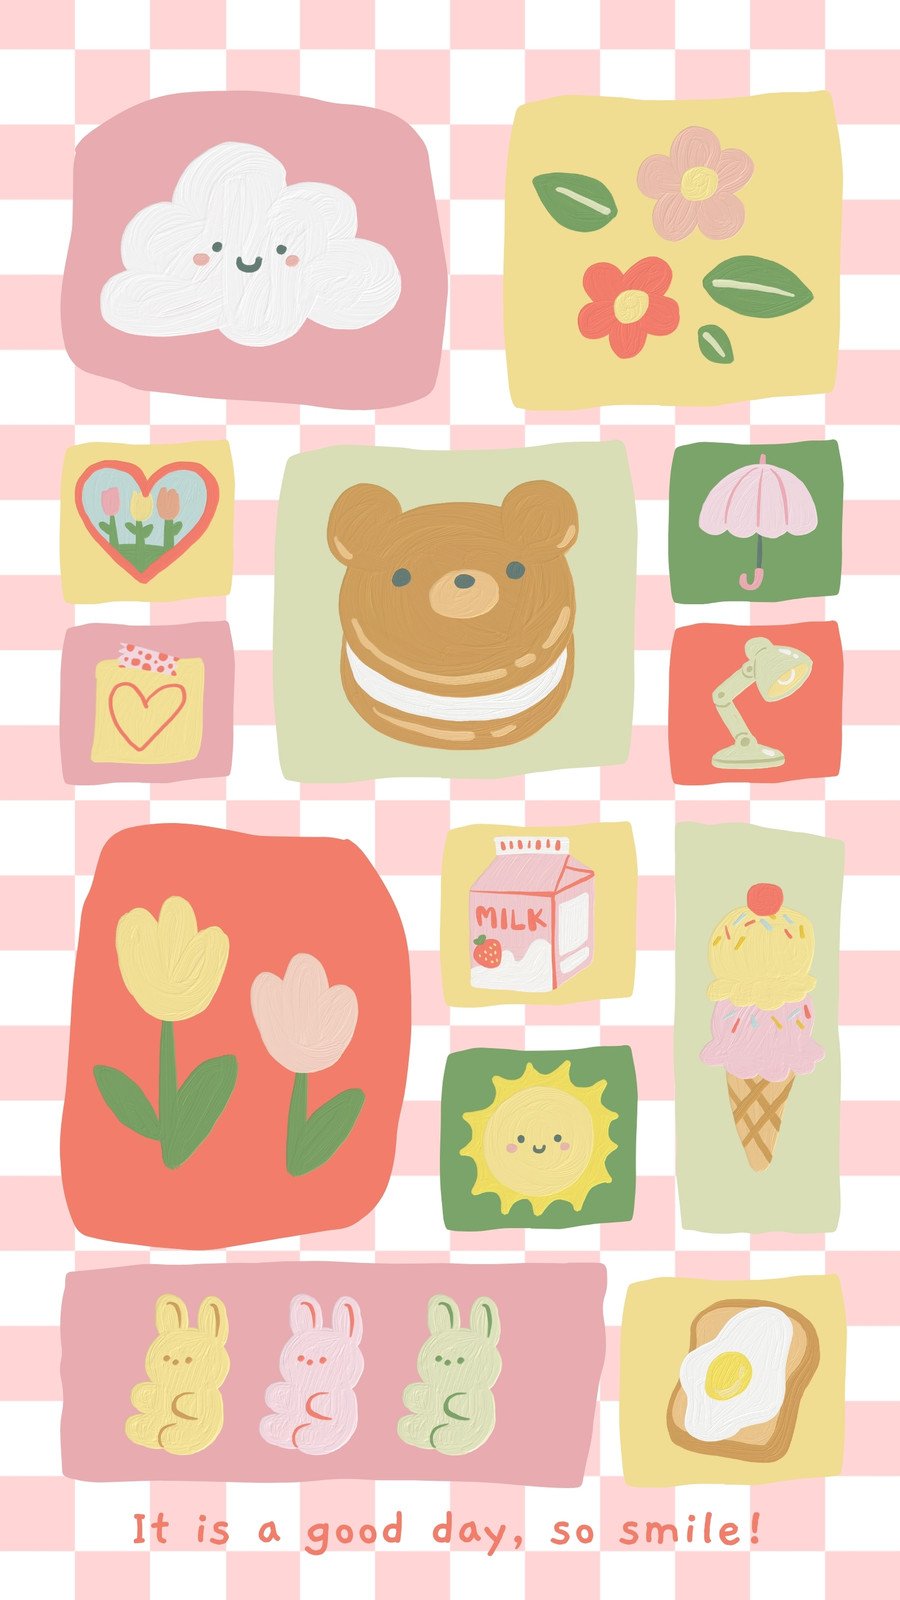 Customize 2,571+ Cute Phone Wallpaper Templates Online - Canva